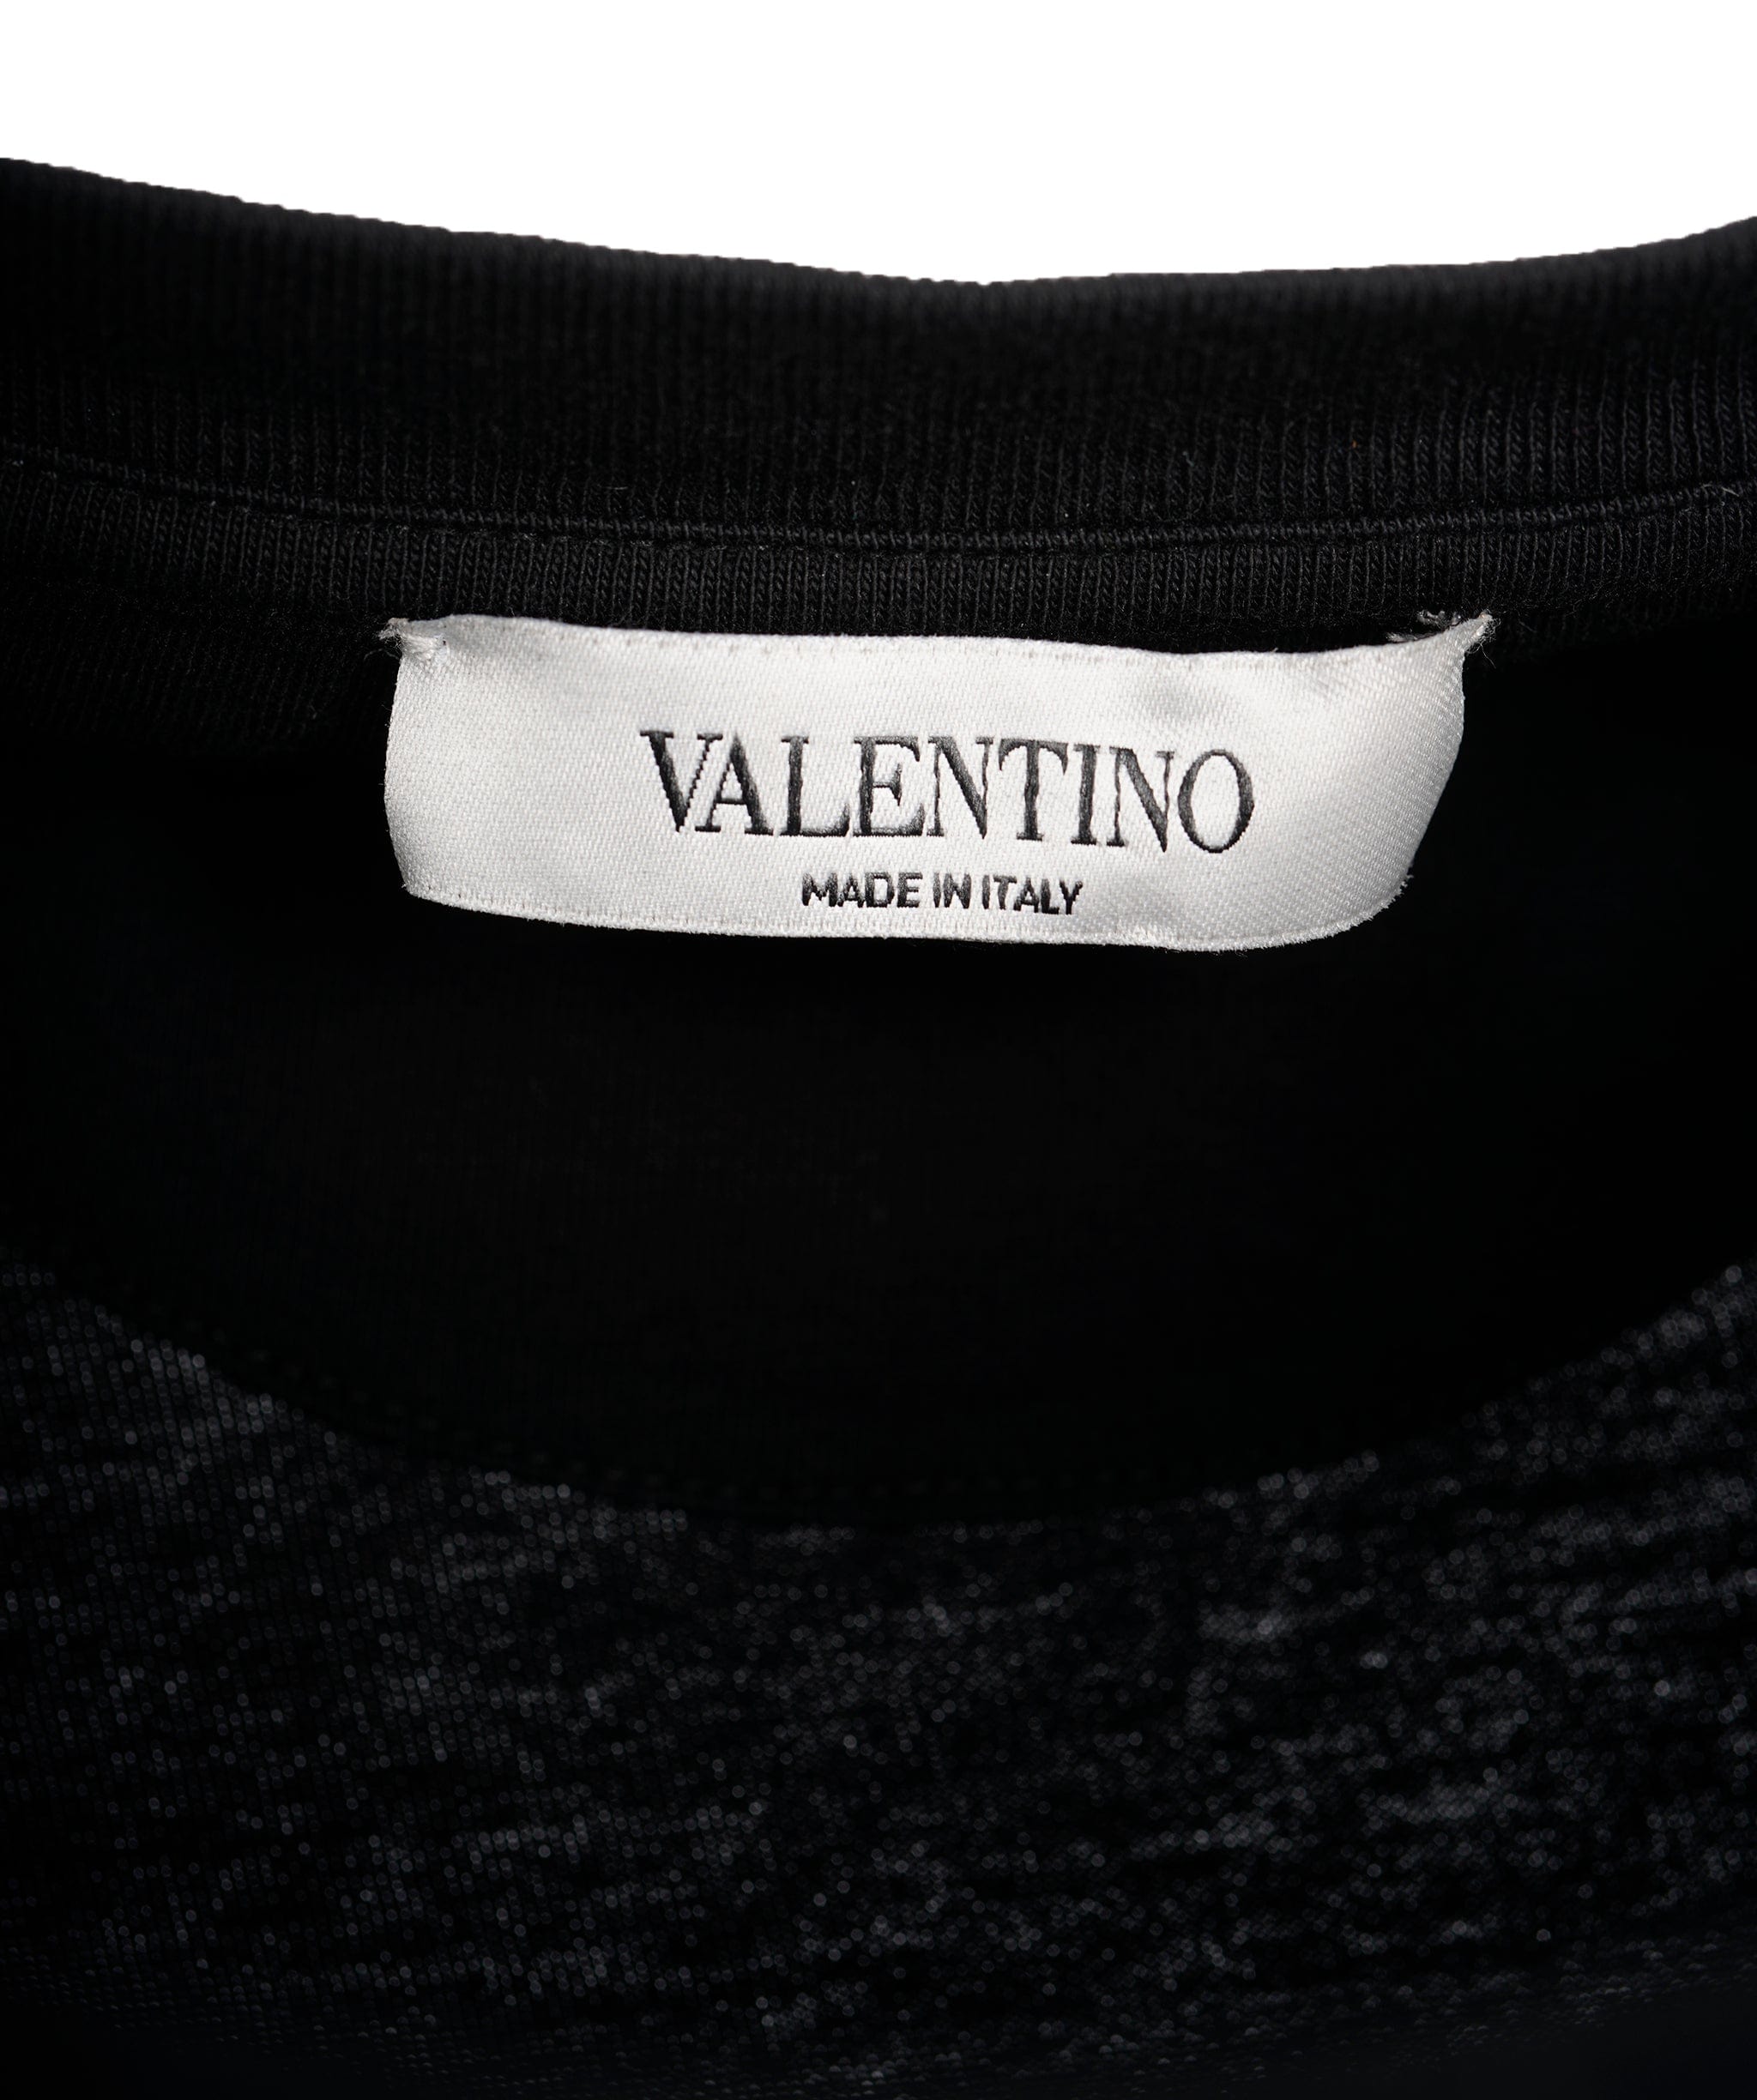 Valentino V Valentino Top Bottoms Black White Co ord Size Small ALL0459